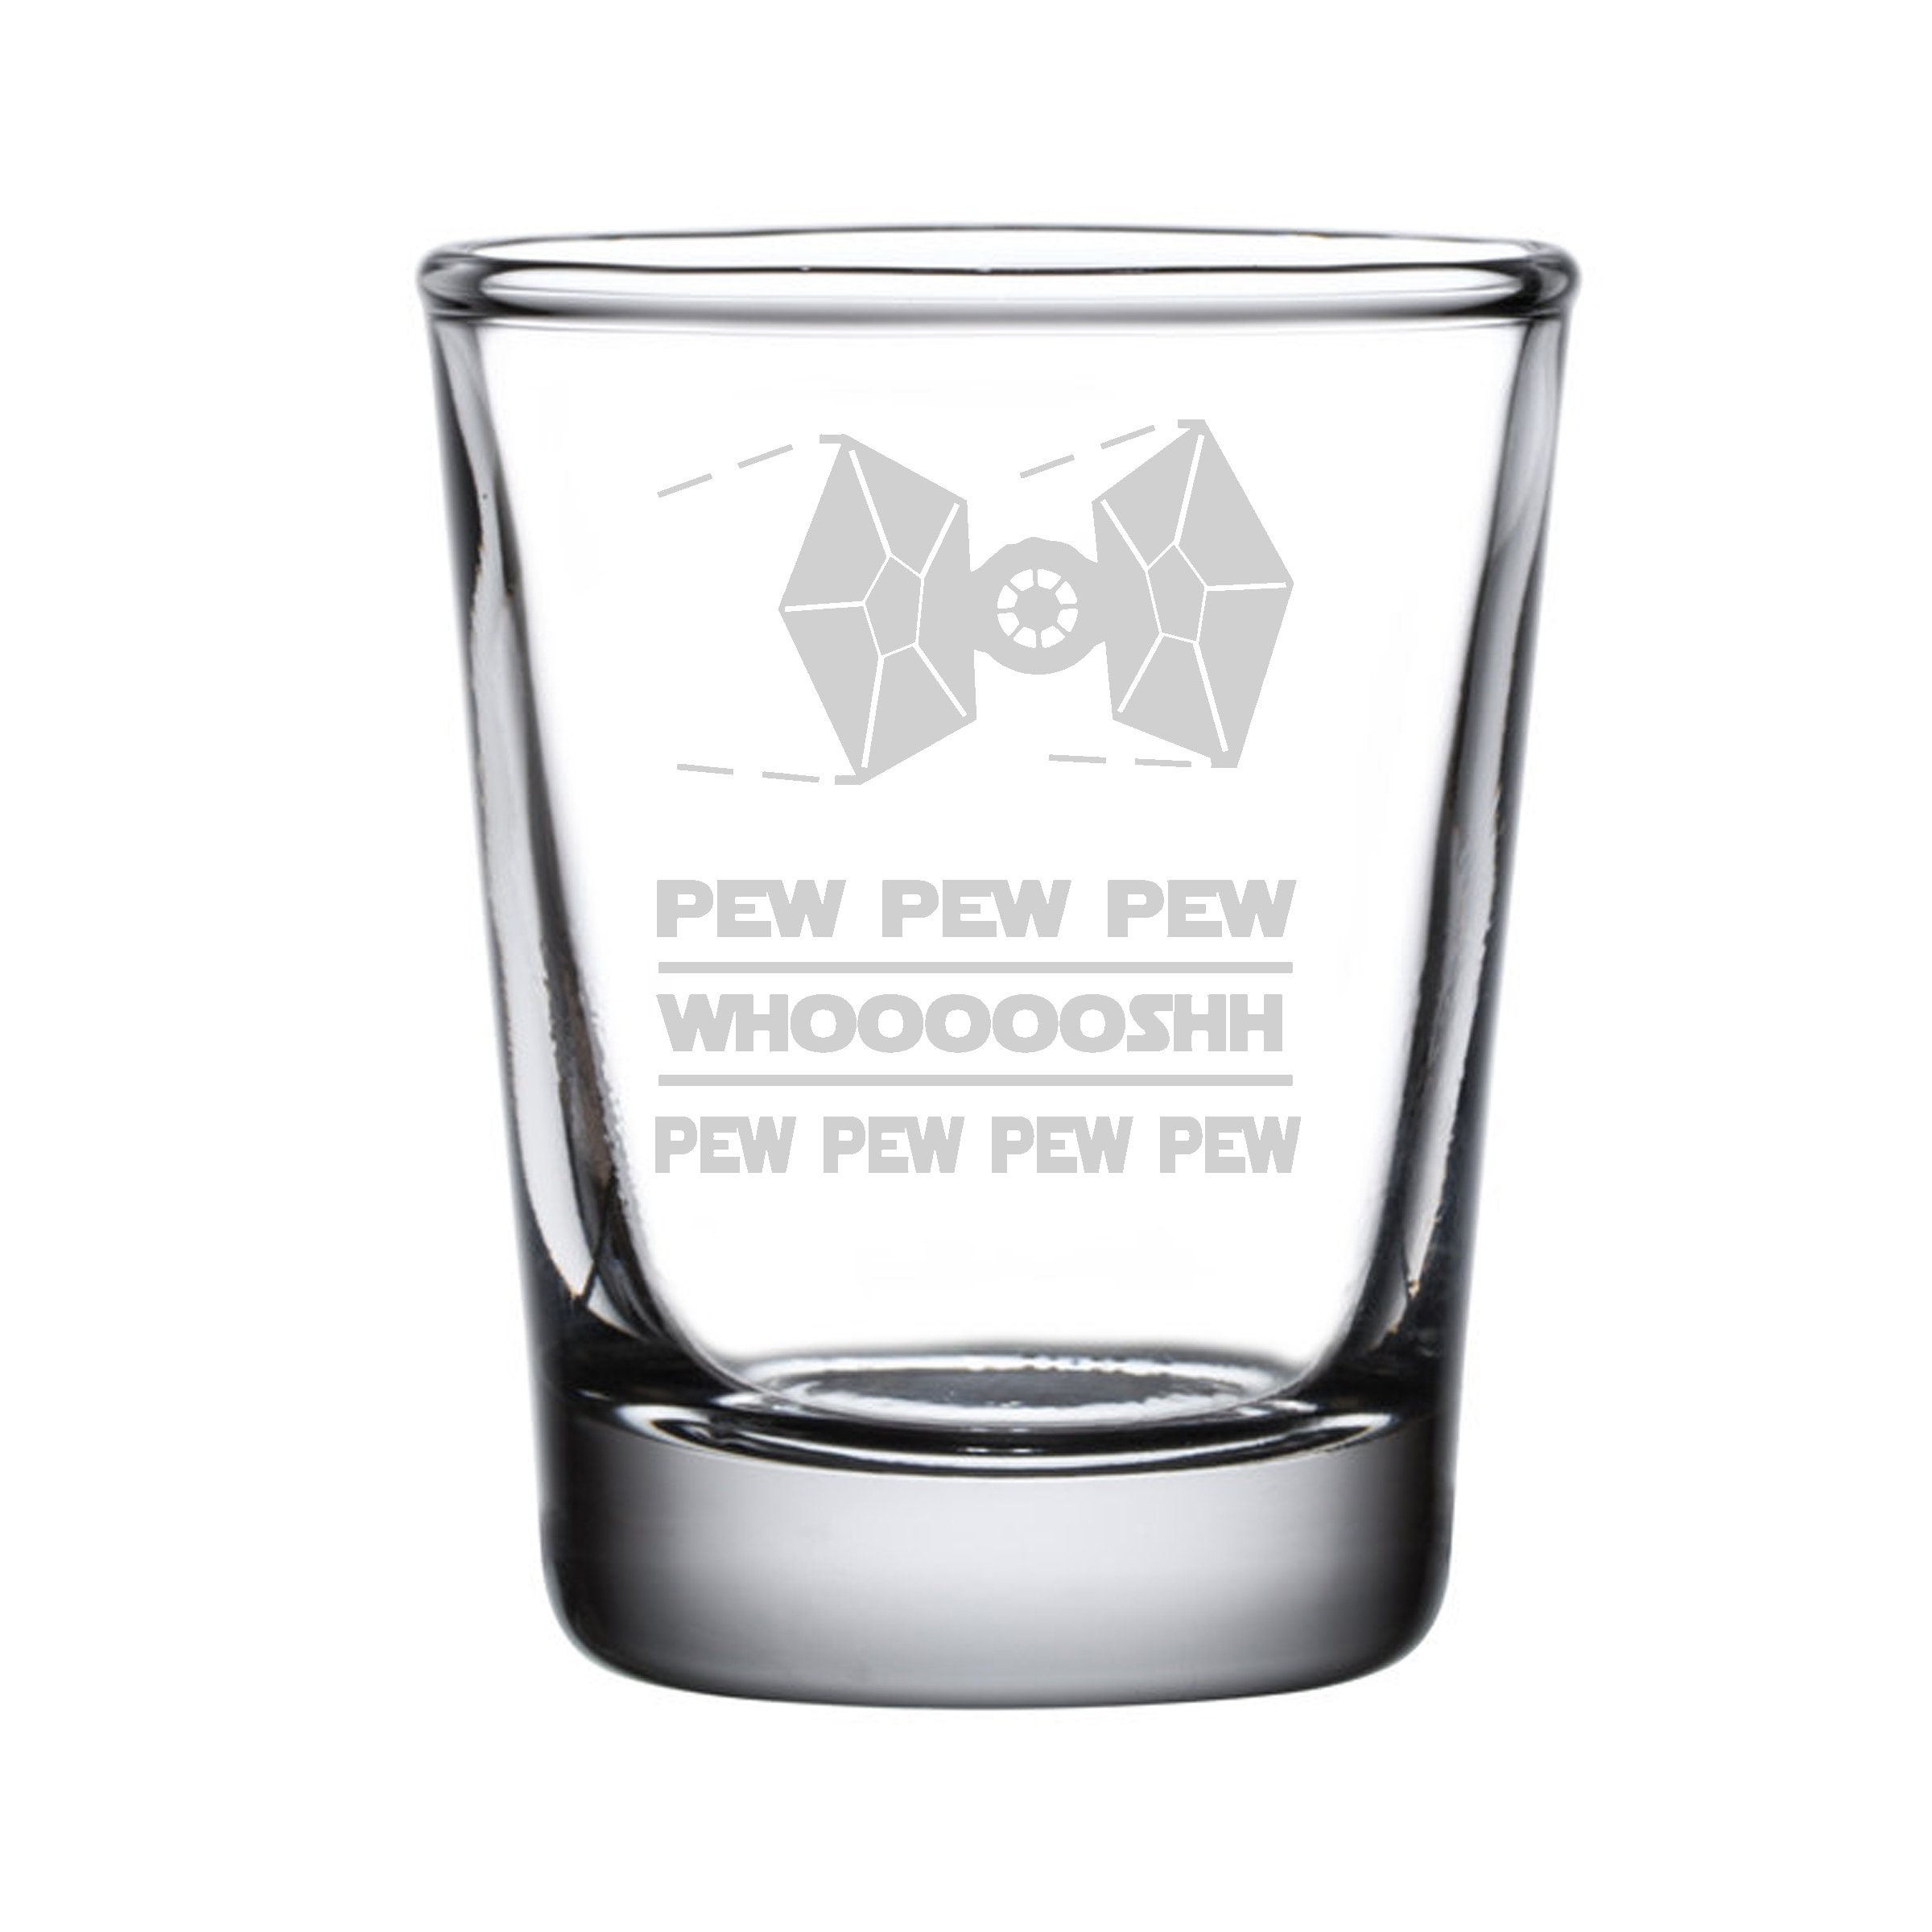 Jedi PINT Glass Set of 4: Rebel Pew pew pew Dangerous to go 